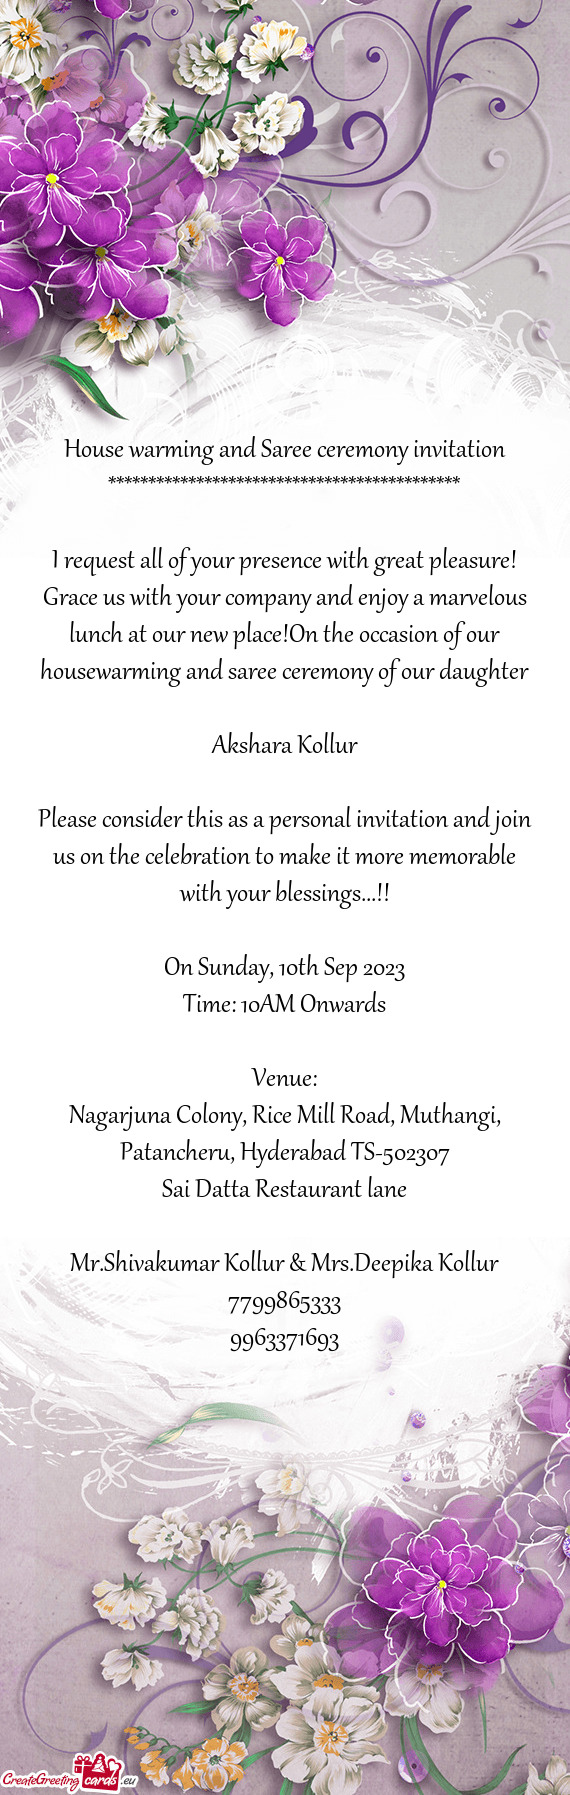 House warming and Saree ceremony invitation